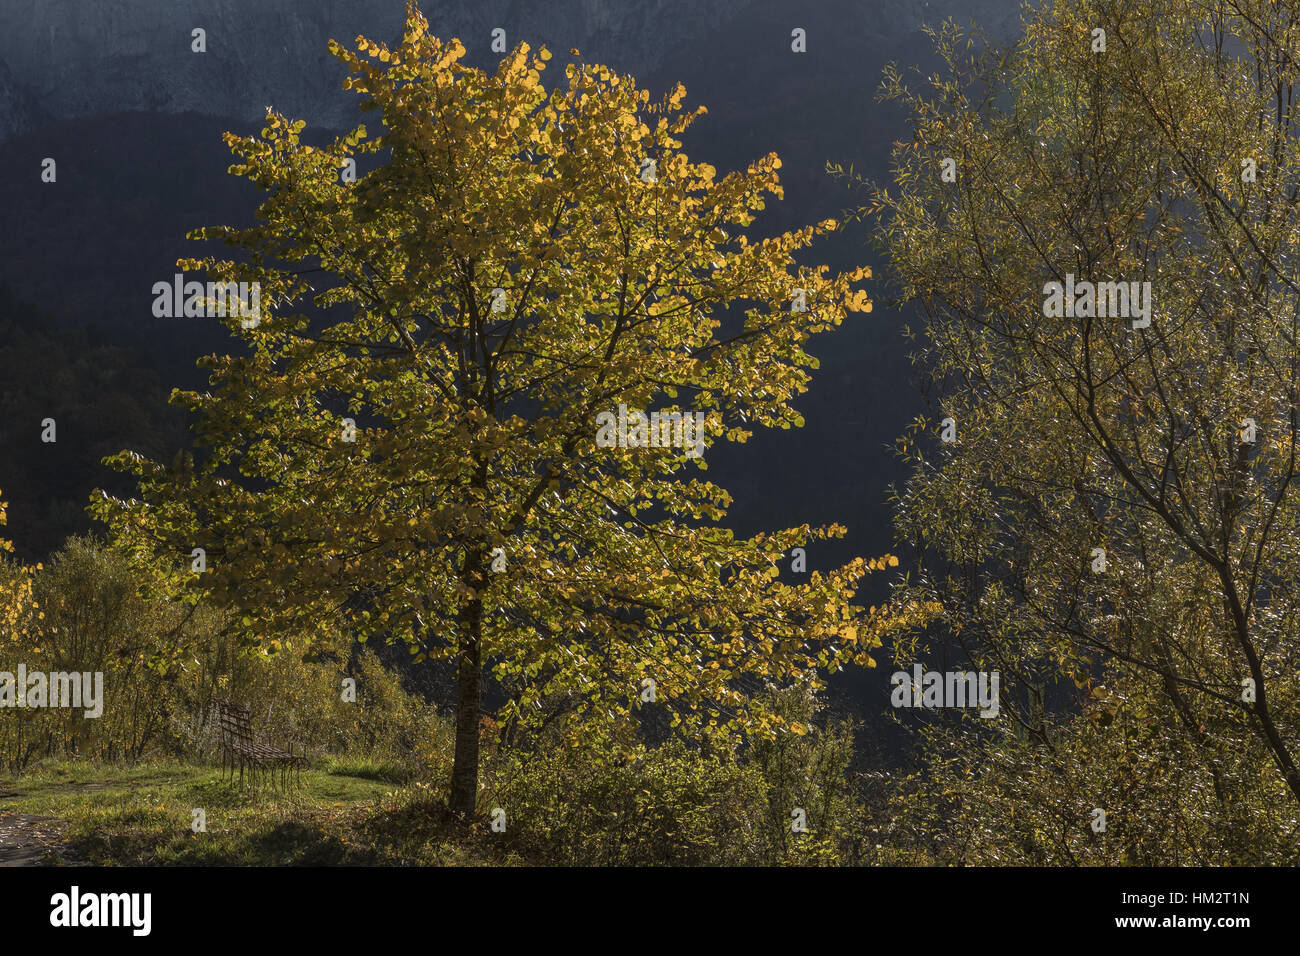 Downy lime, Tilia tomentosa tree in autumn colour, Aoos gorge, north Greece. Stock Photo